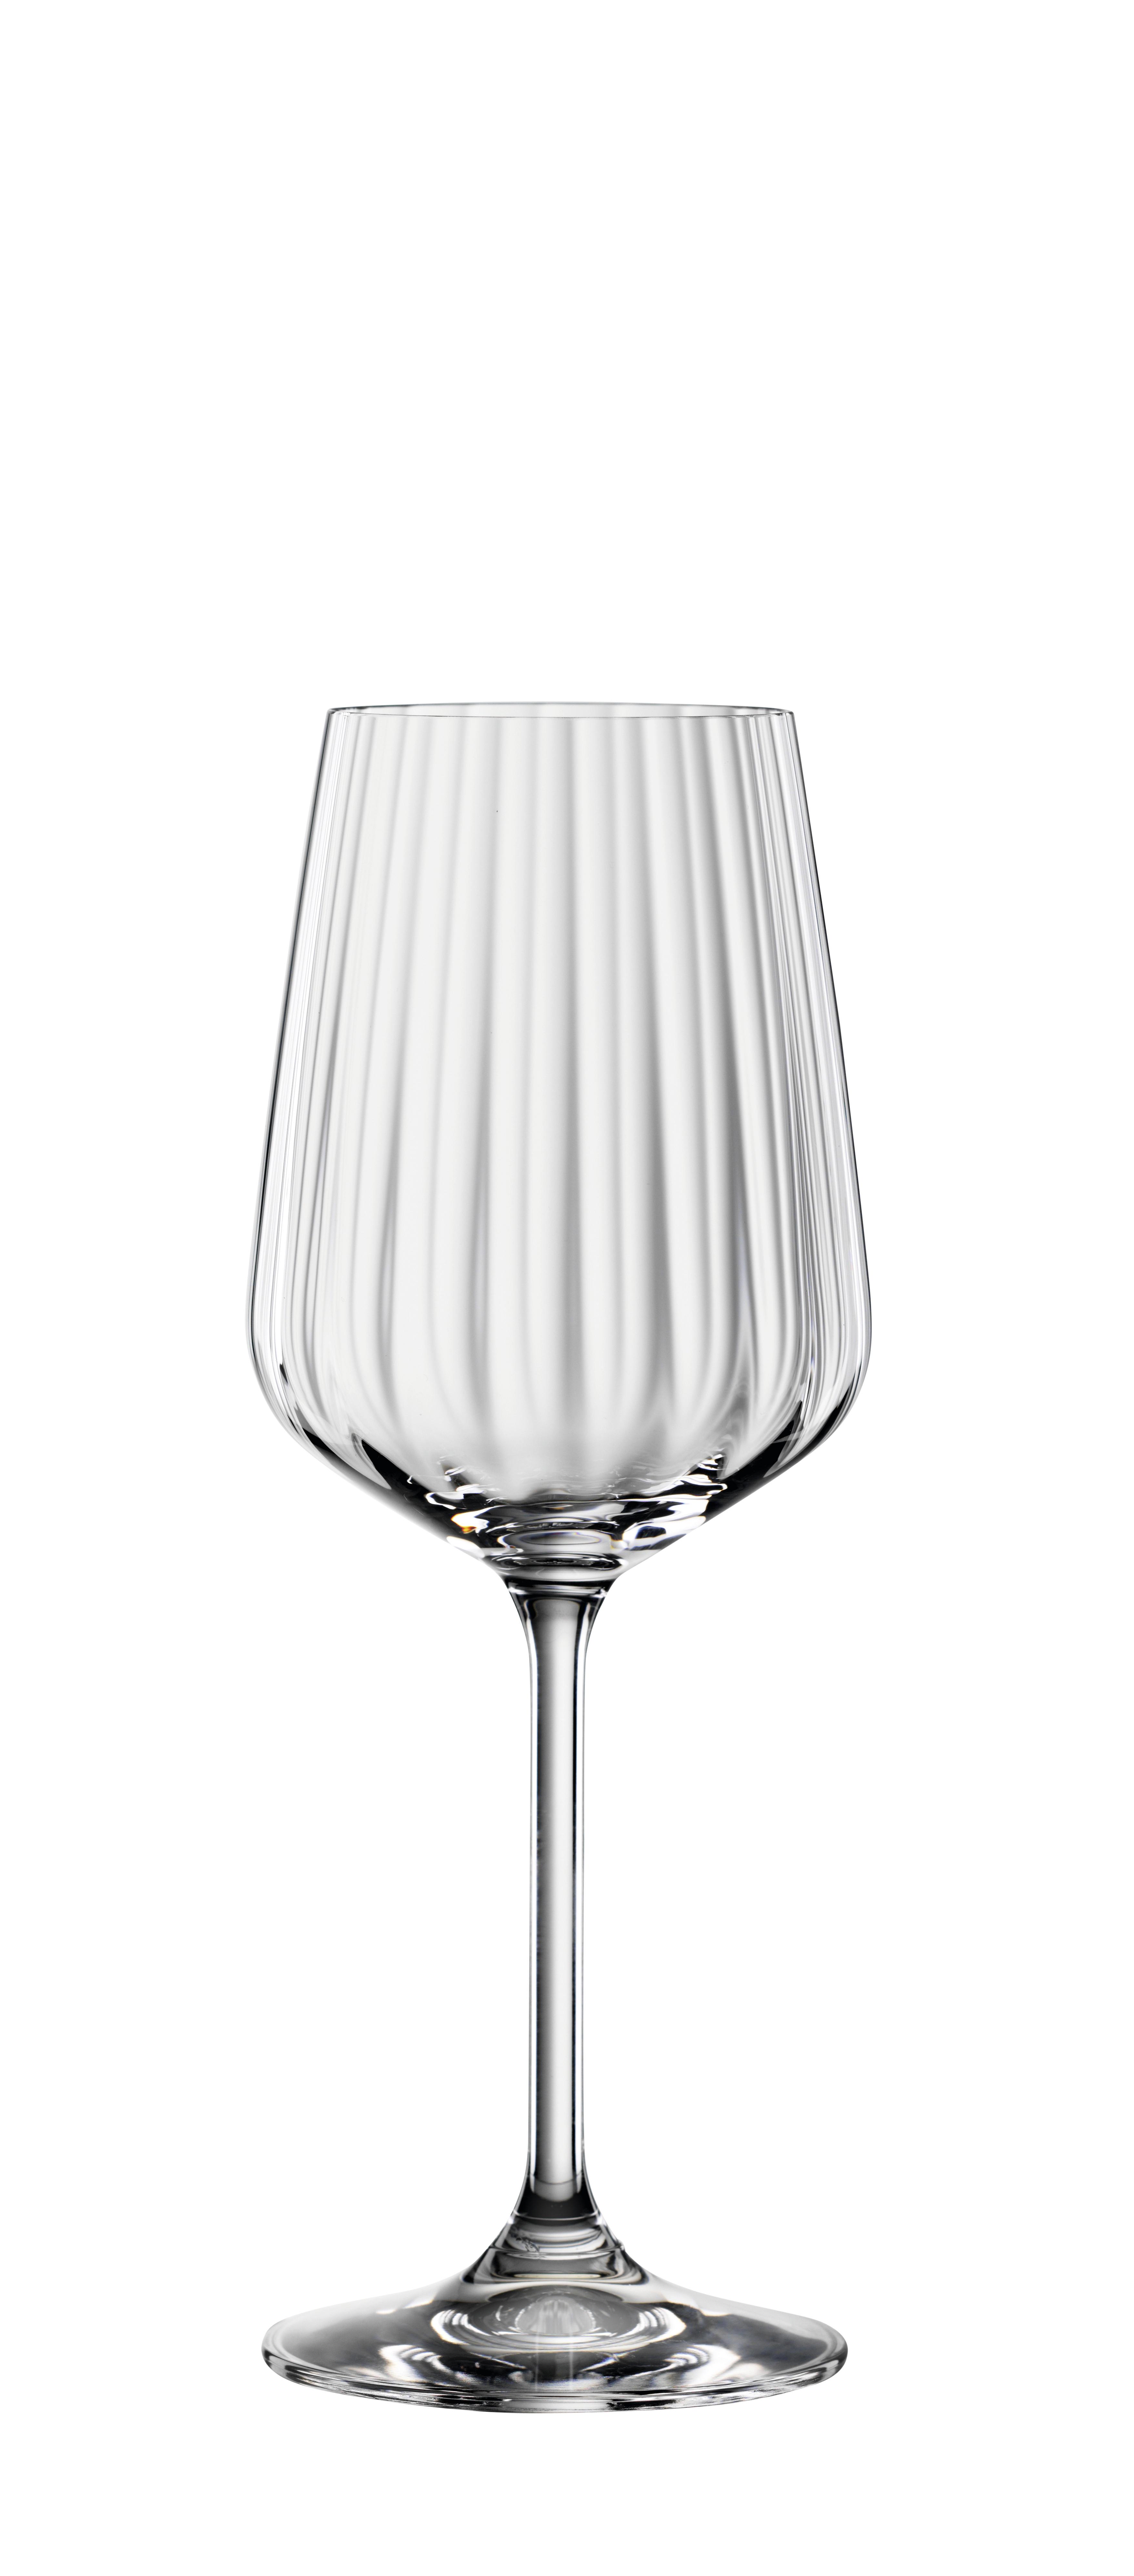 Weißweinglas Lifestyle 4-teilig - Klar, MODERN, Glas (8,5/8,5/22,2cm) - Spiegelau